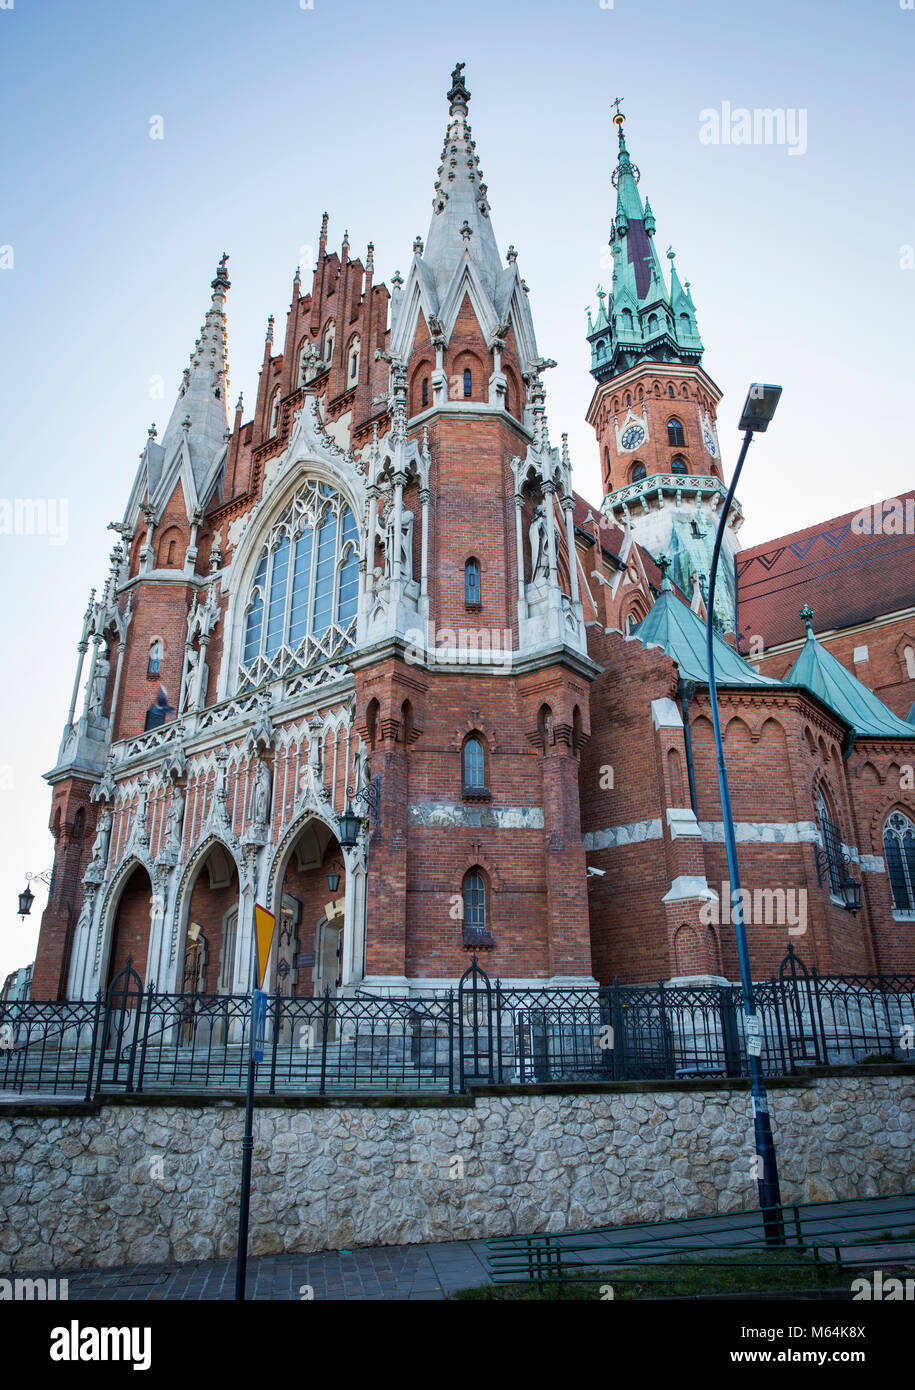 St. Joseph's church in Podgorze district of Krakow city, Poland Stock Photo